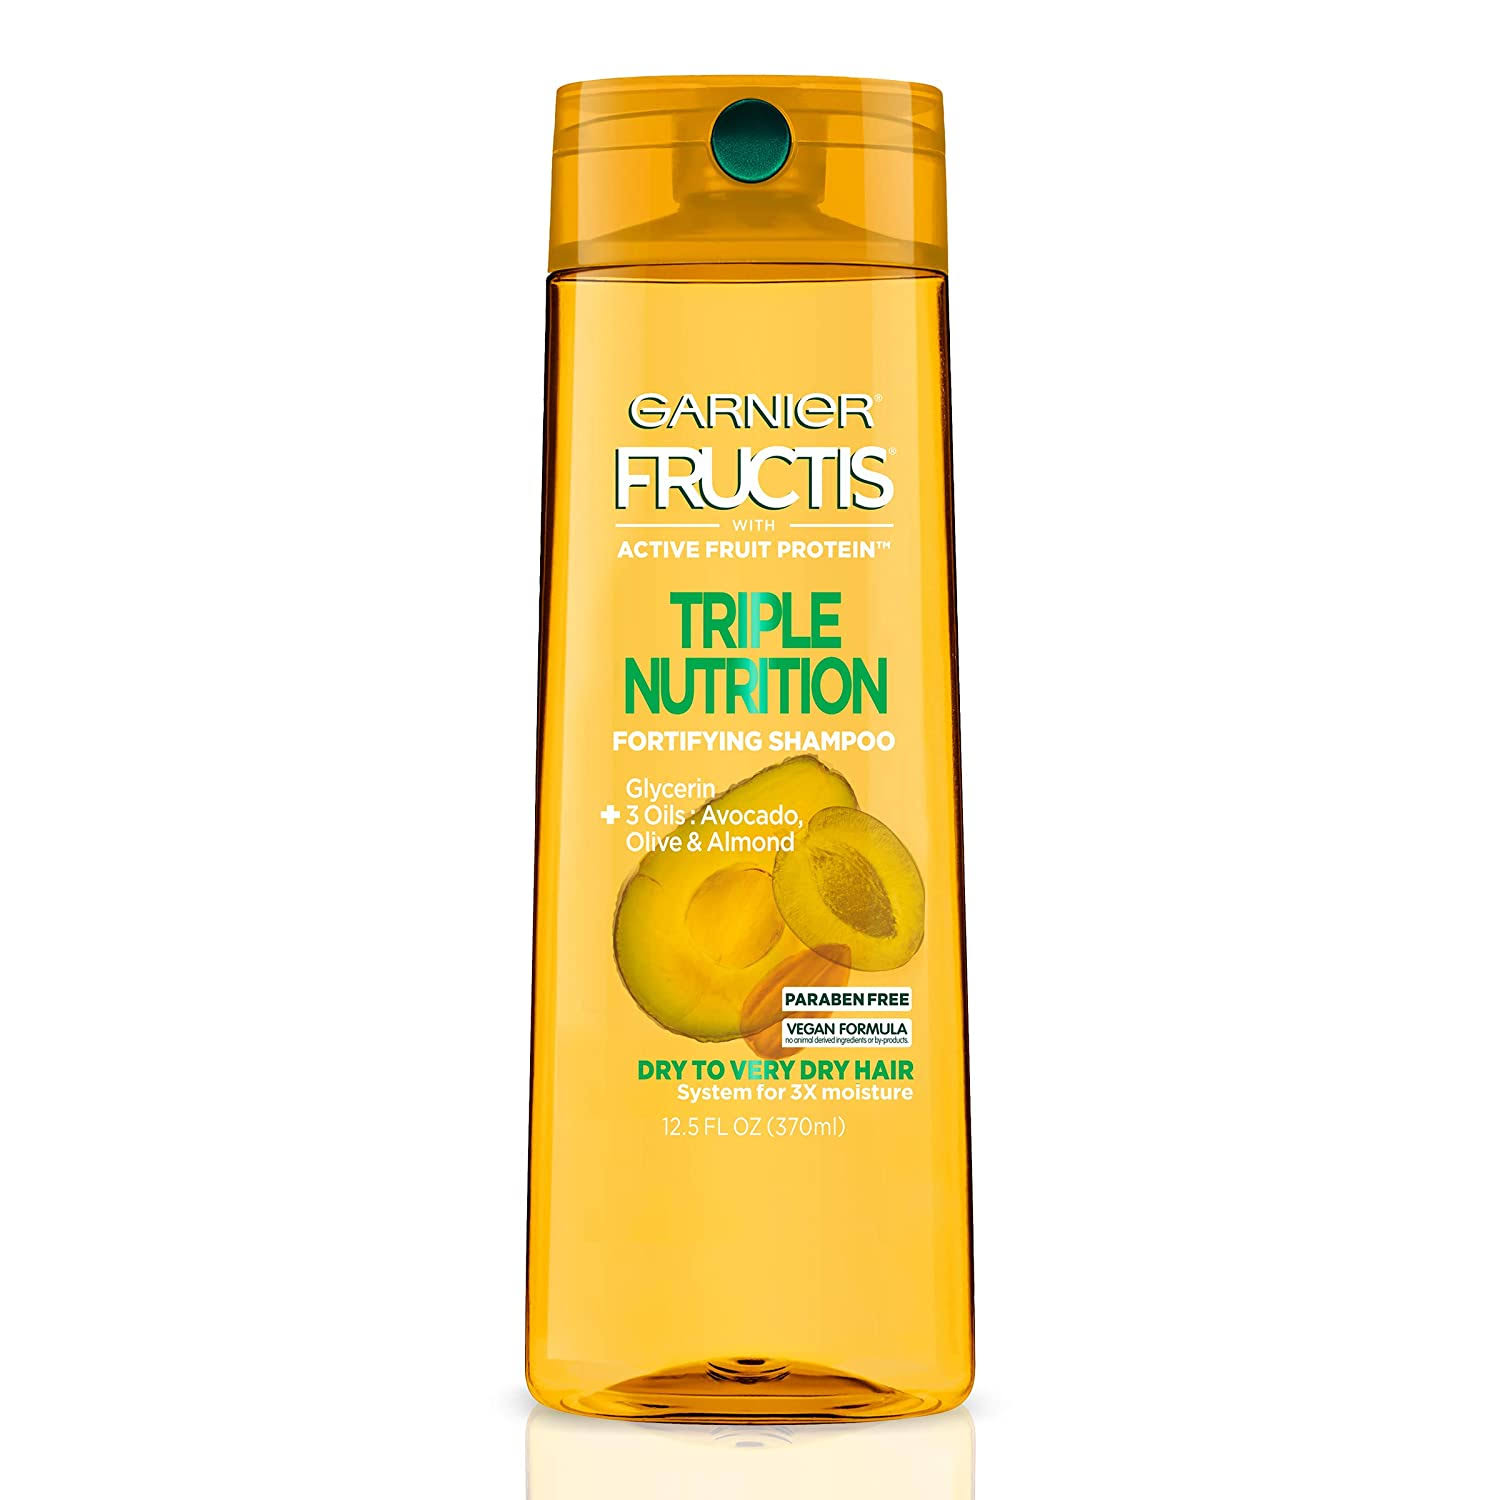 Garnier Fructis Triple Nutrition Shampoo - 12.5oz